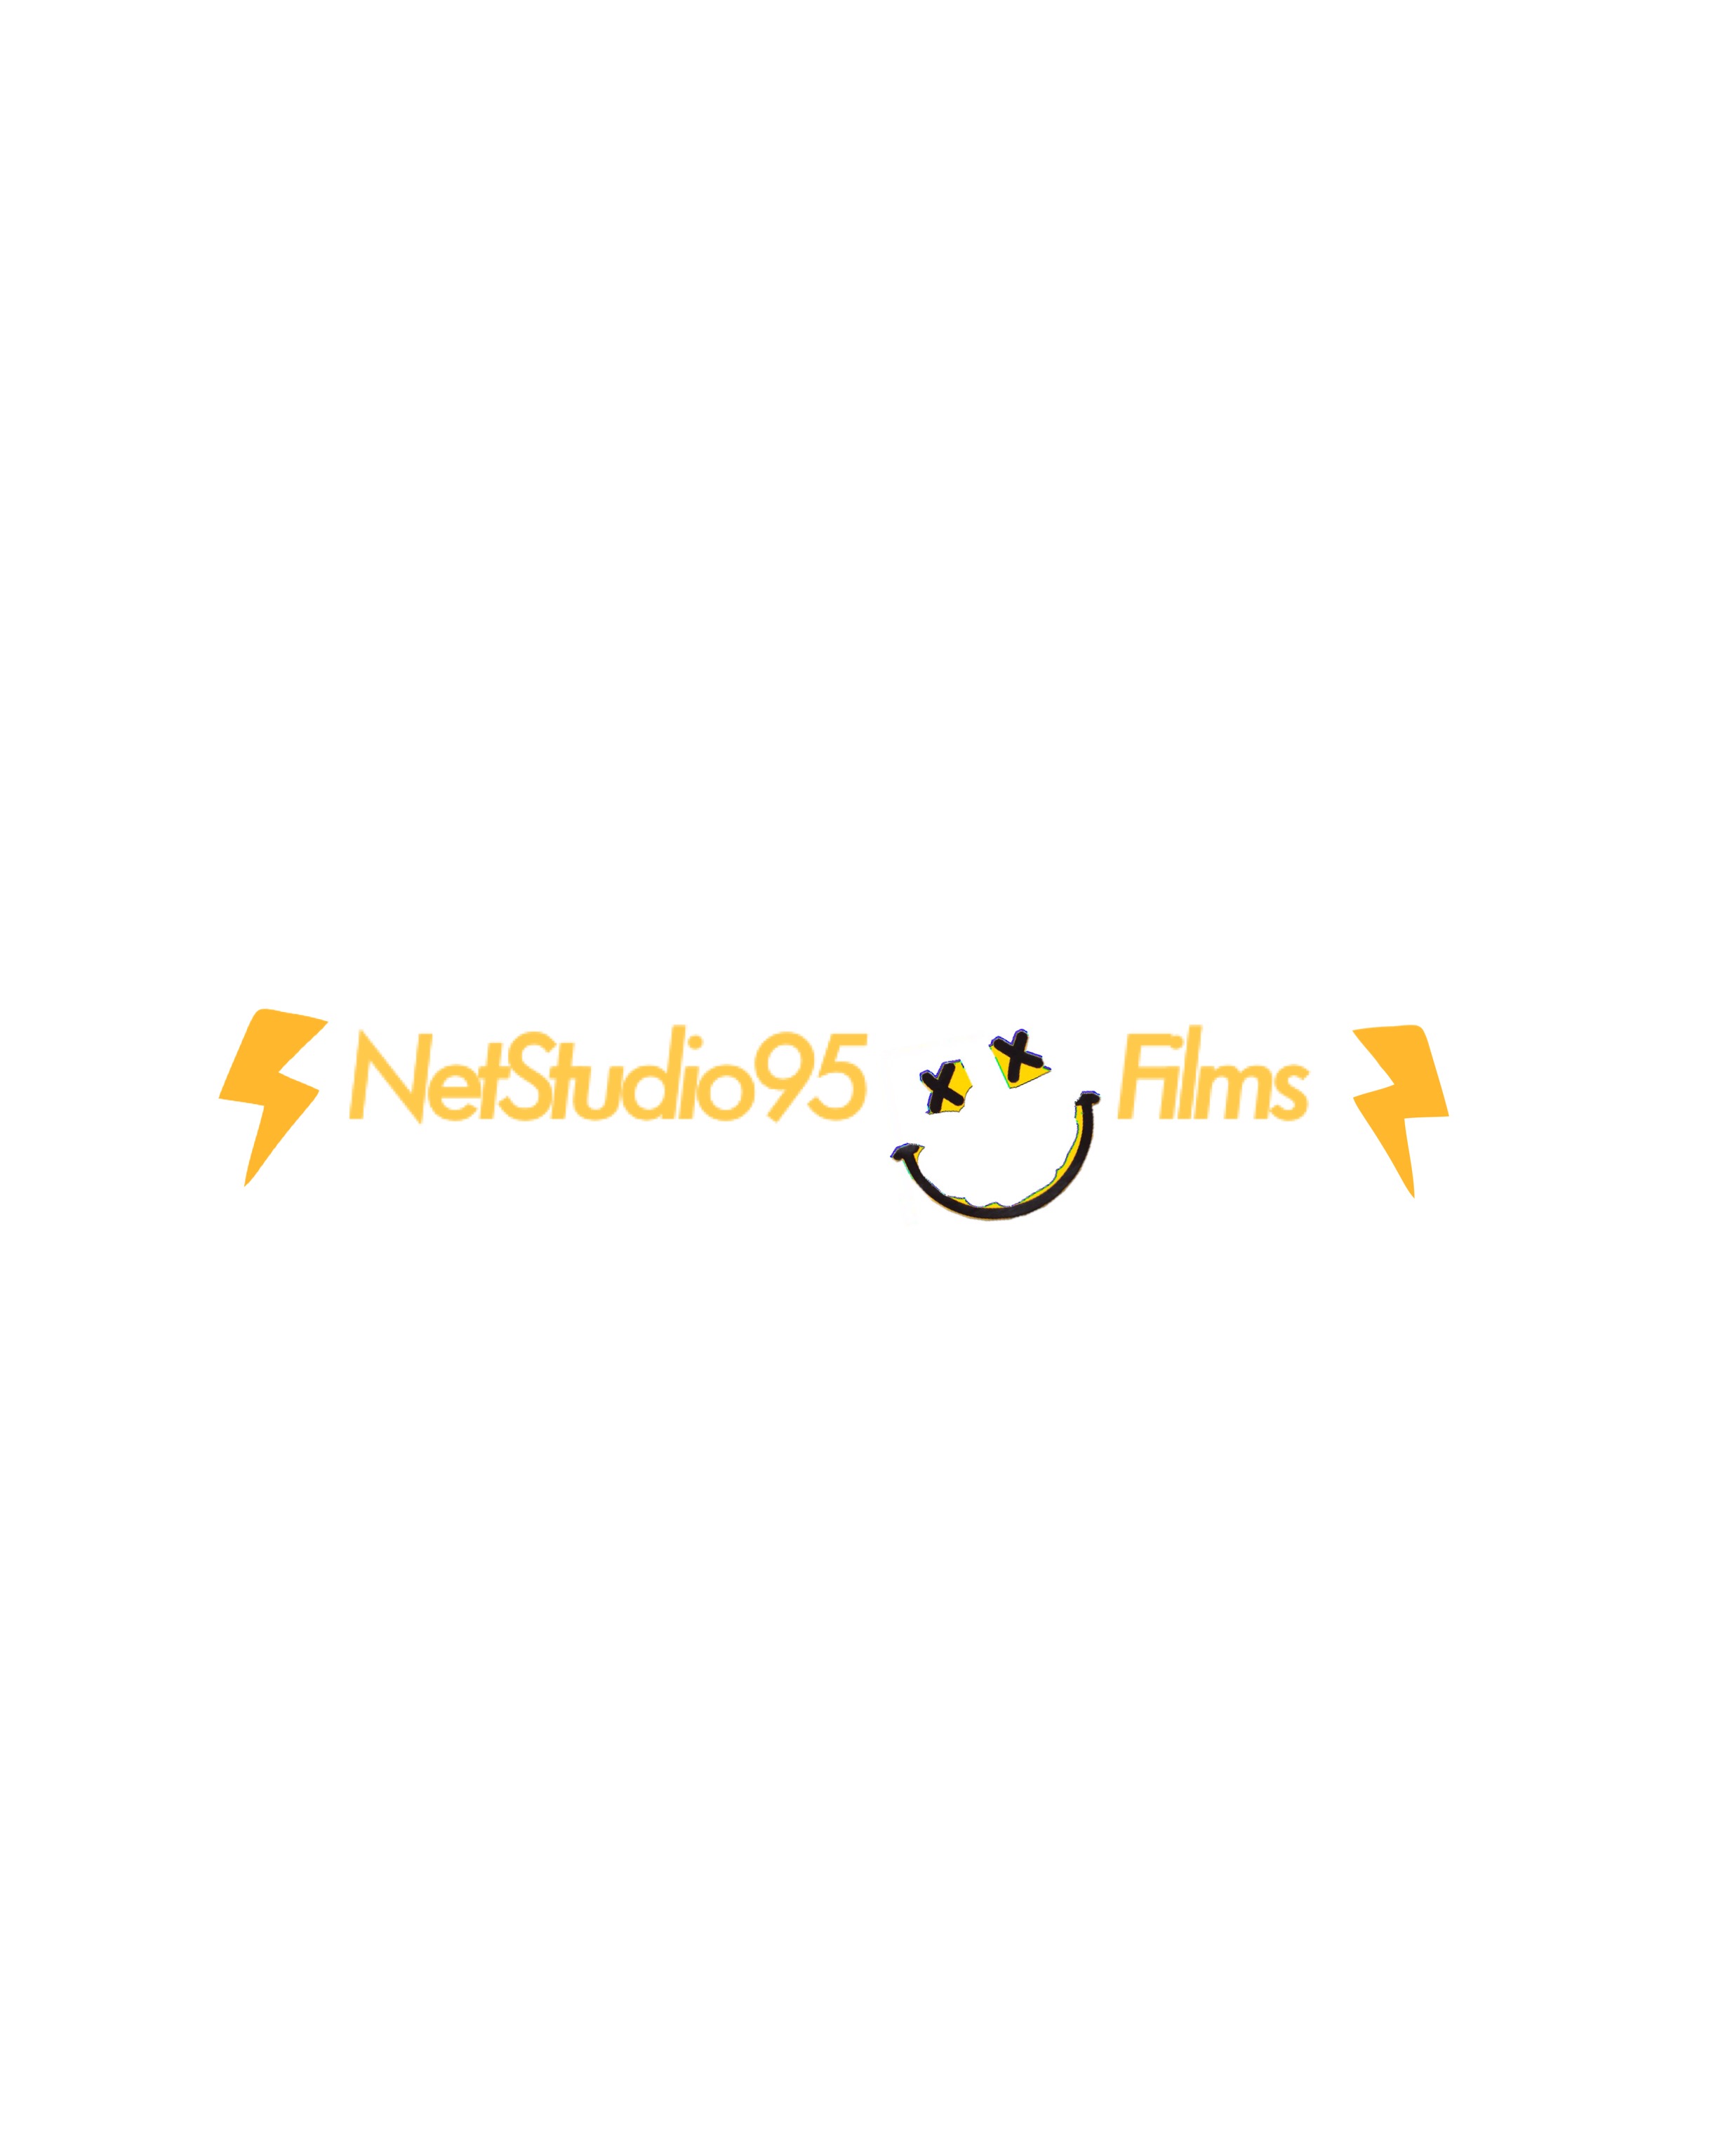 NetStudio95 Films